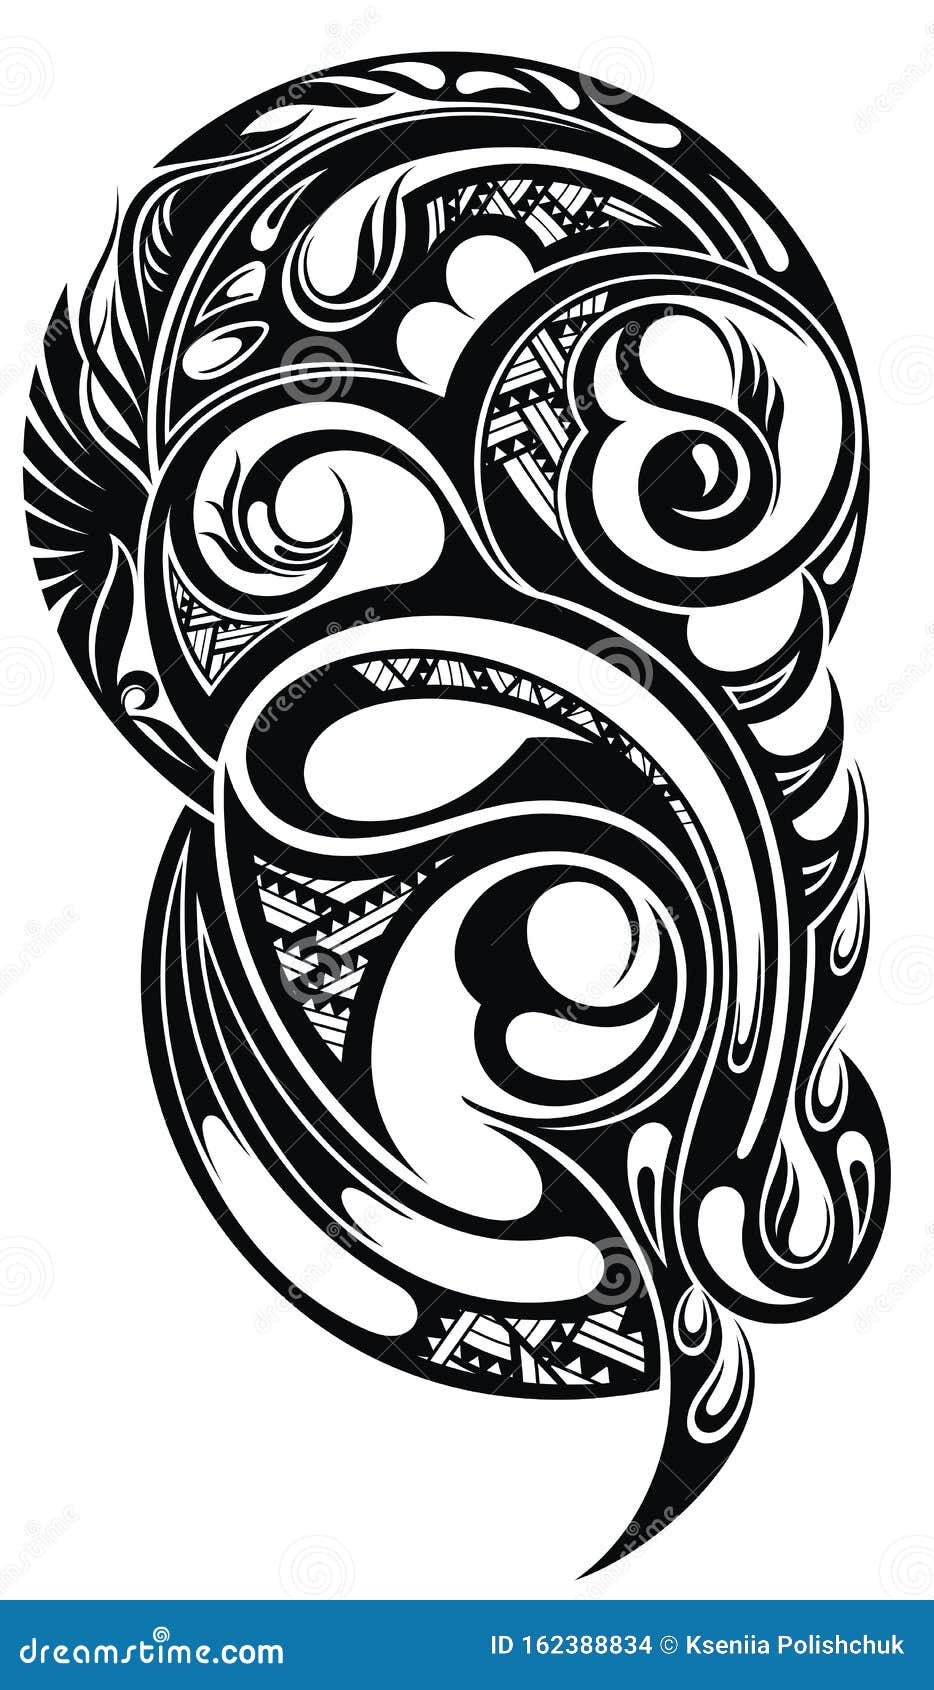 Share 80+ new tribal tattoo designs latest - in.coedo.com.vn